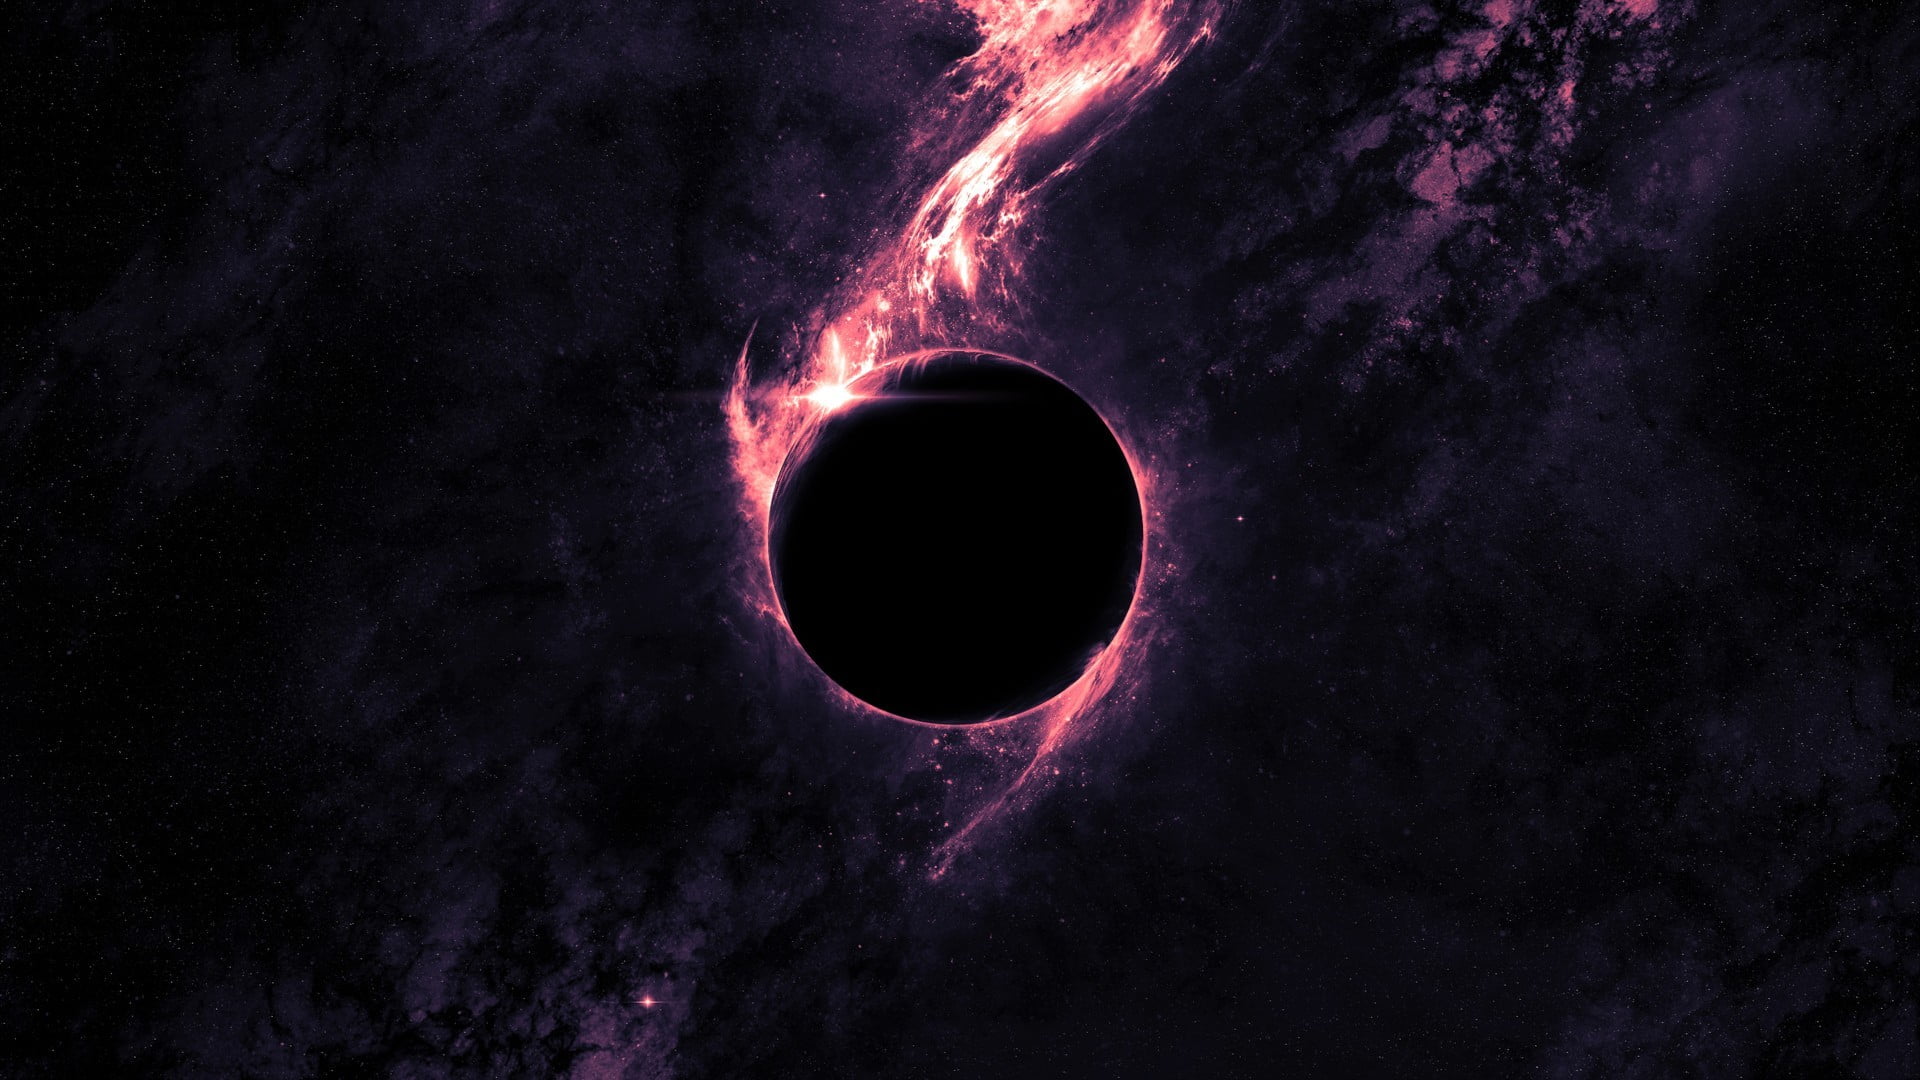 Solar eclipse illustration, black hole digital wallpaper, abstract